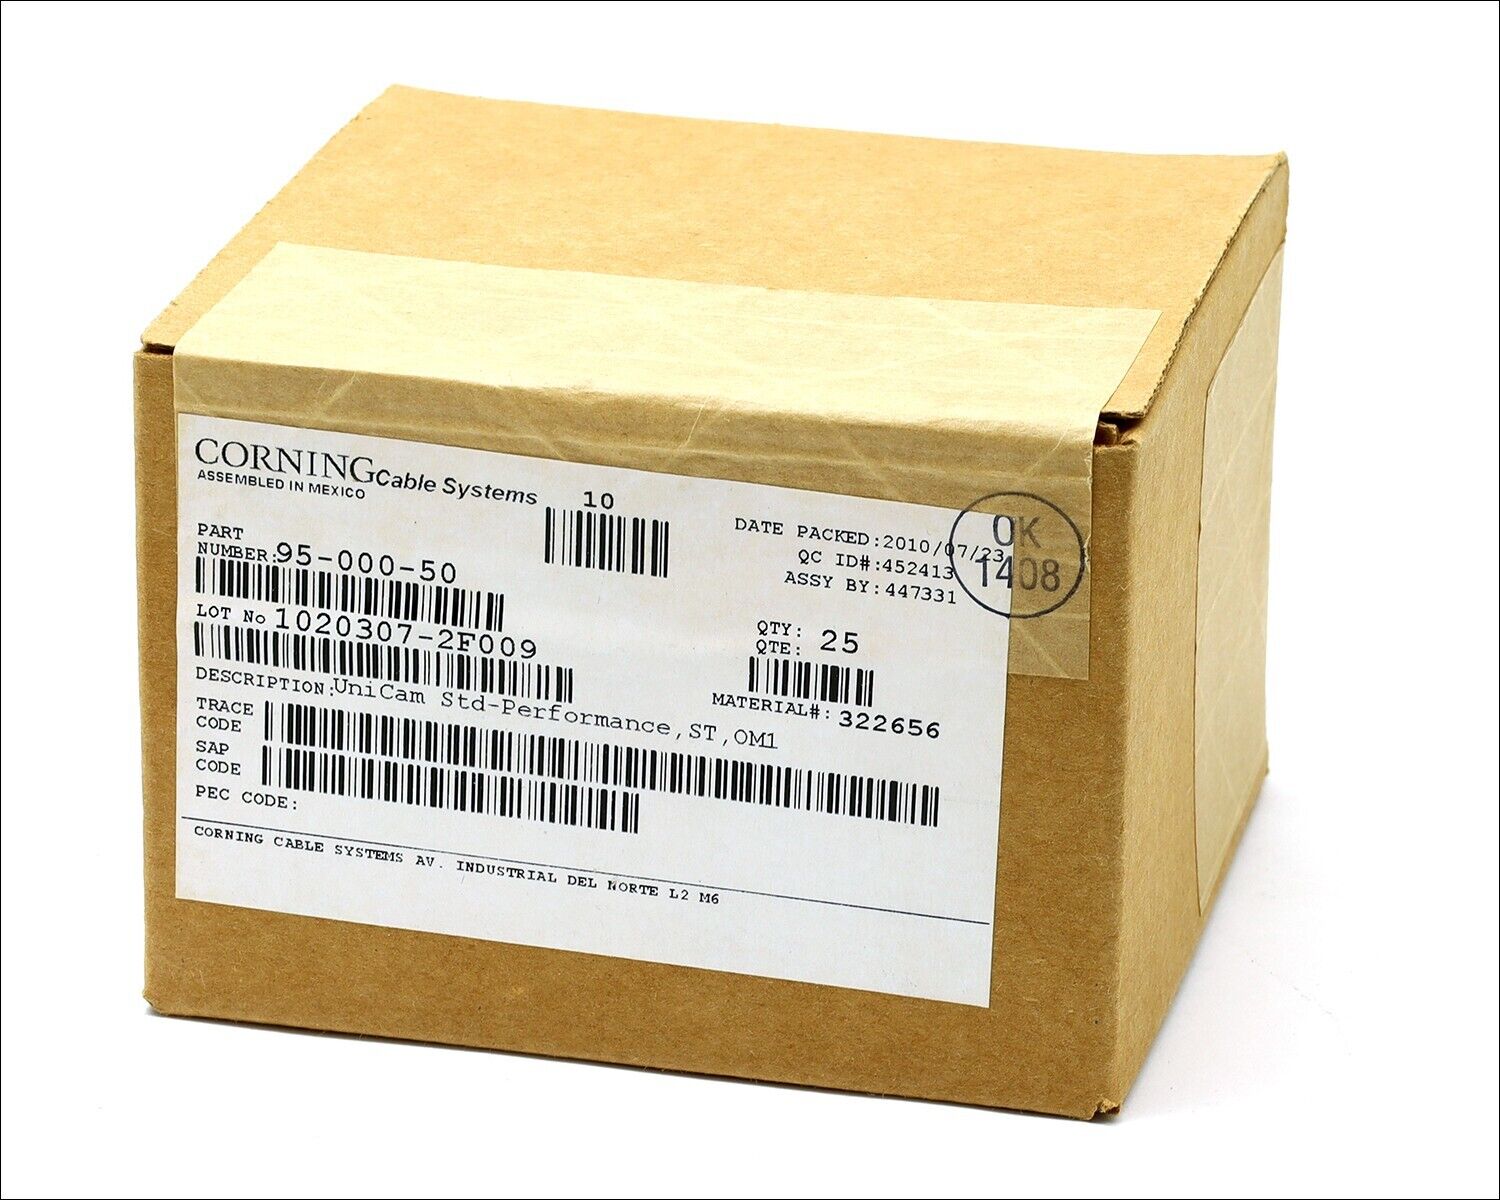 NEW - BOX OF 25 - CORNING 95-000-50 UniCam Fiber Optic Multimode 62.5 Connector